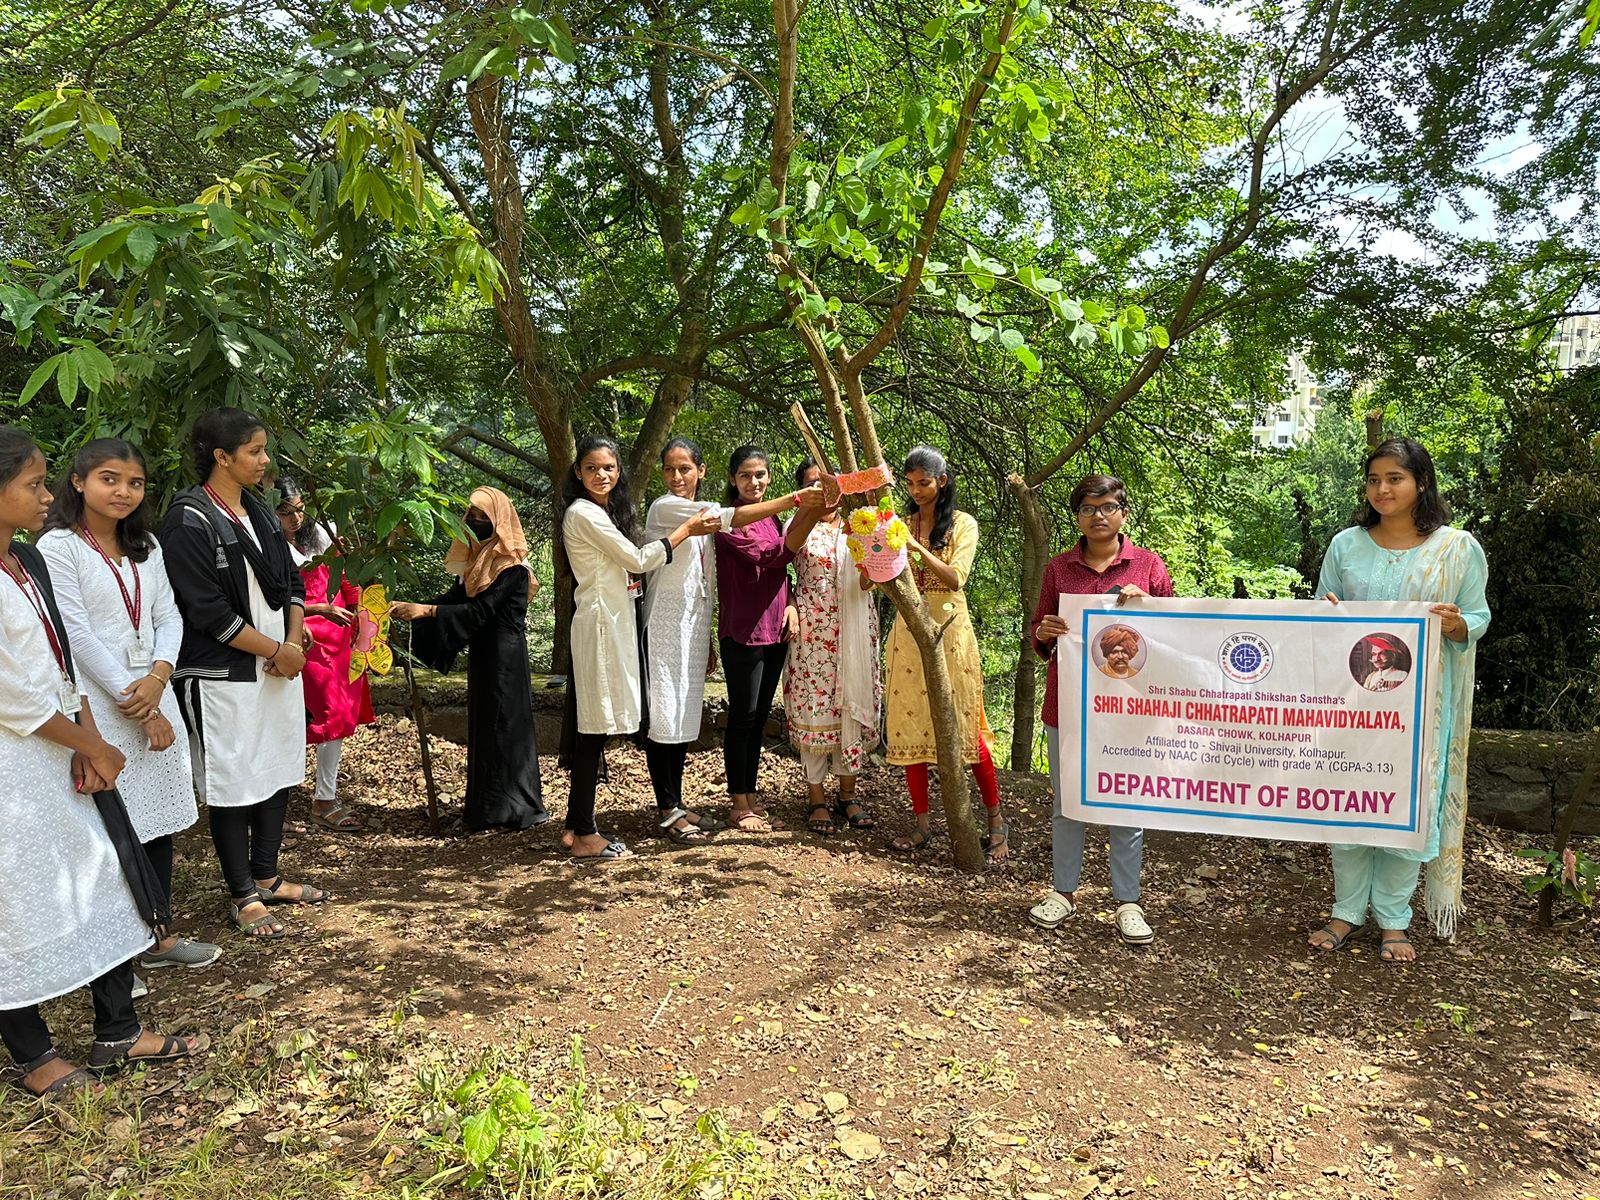 Environmentally friendly Rakshabandhan was celebrated by tying rakhis to trees in Shahaji College